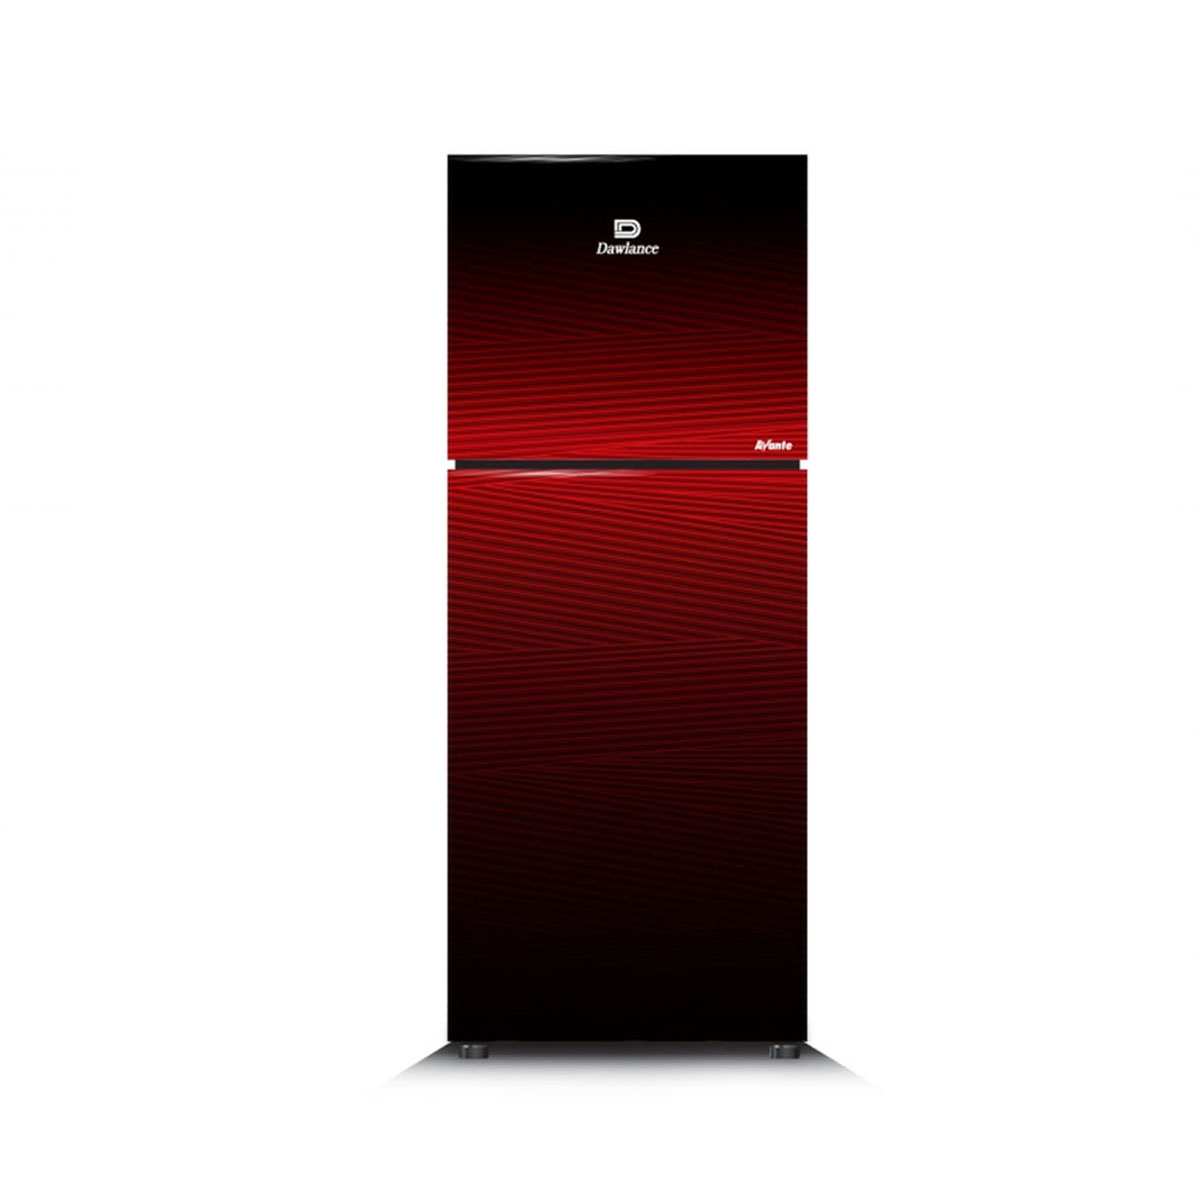 Dawlance 9160LF Avante Double Door Refrigerator Pearl Red